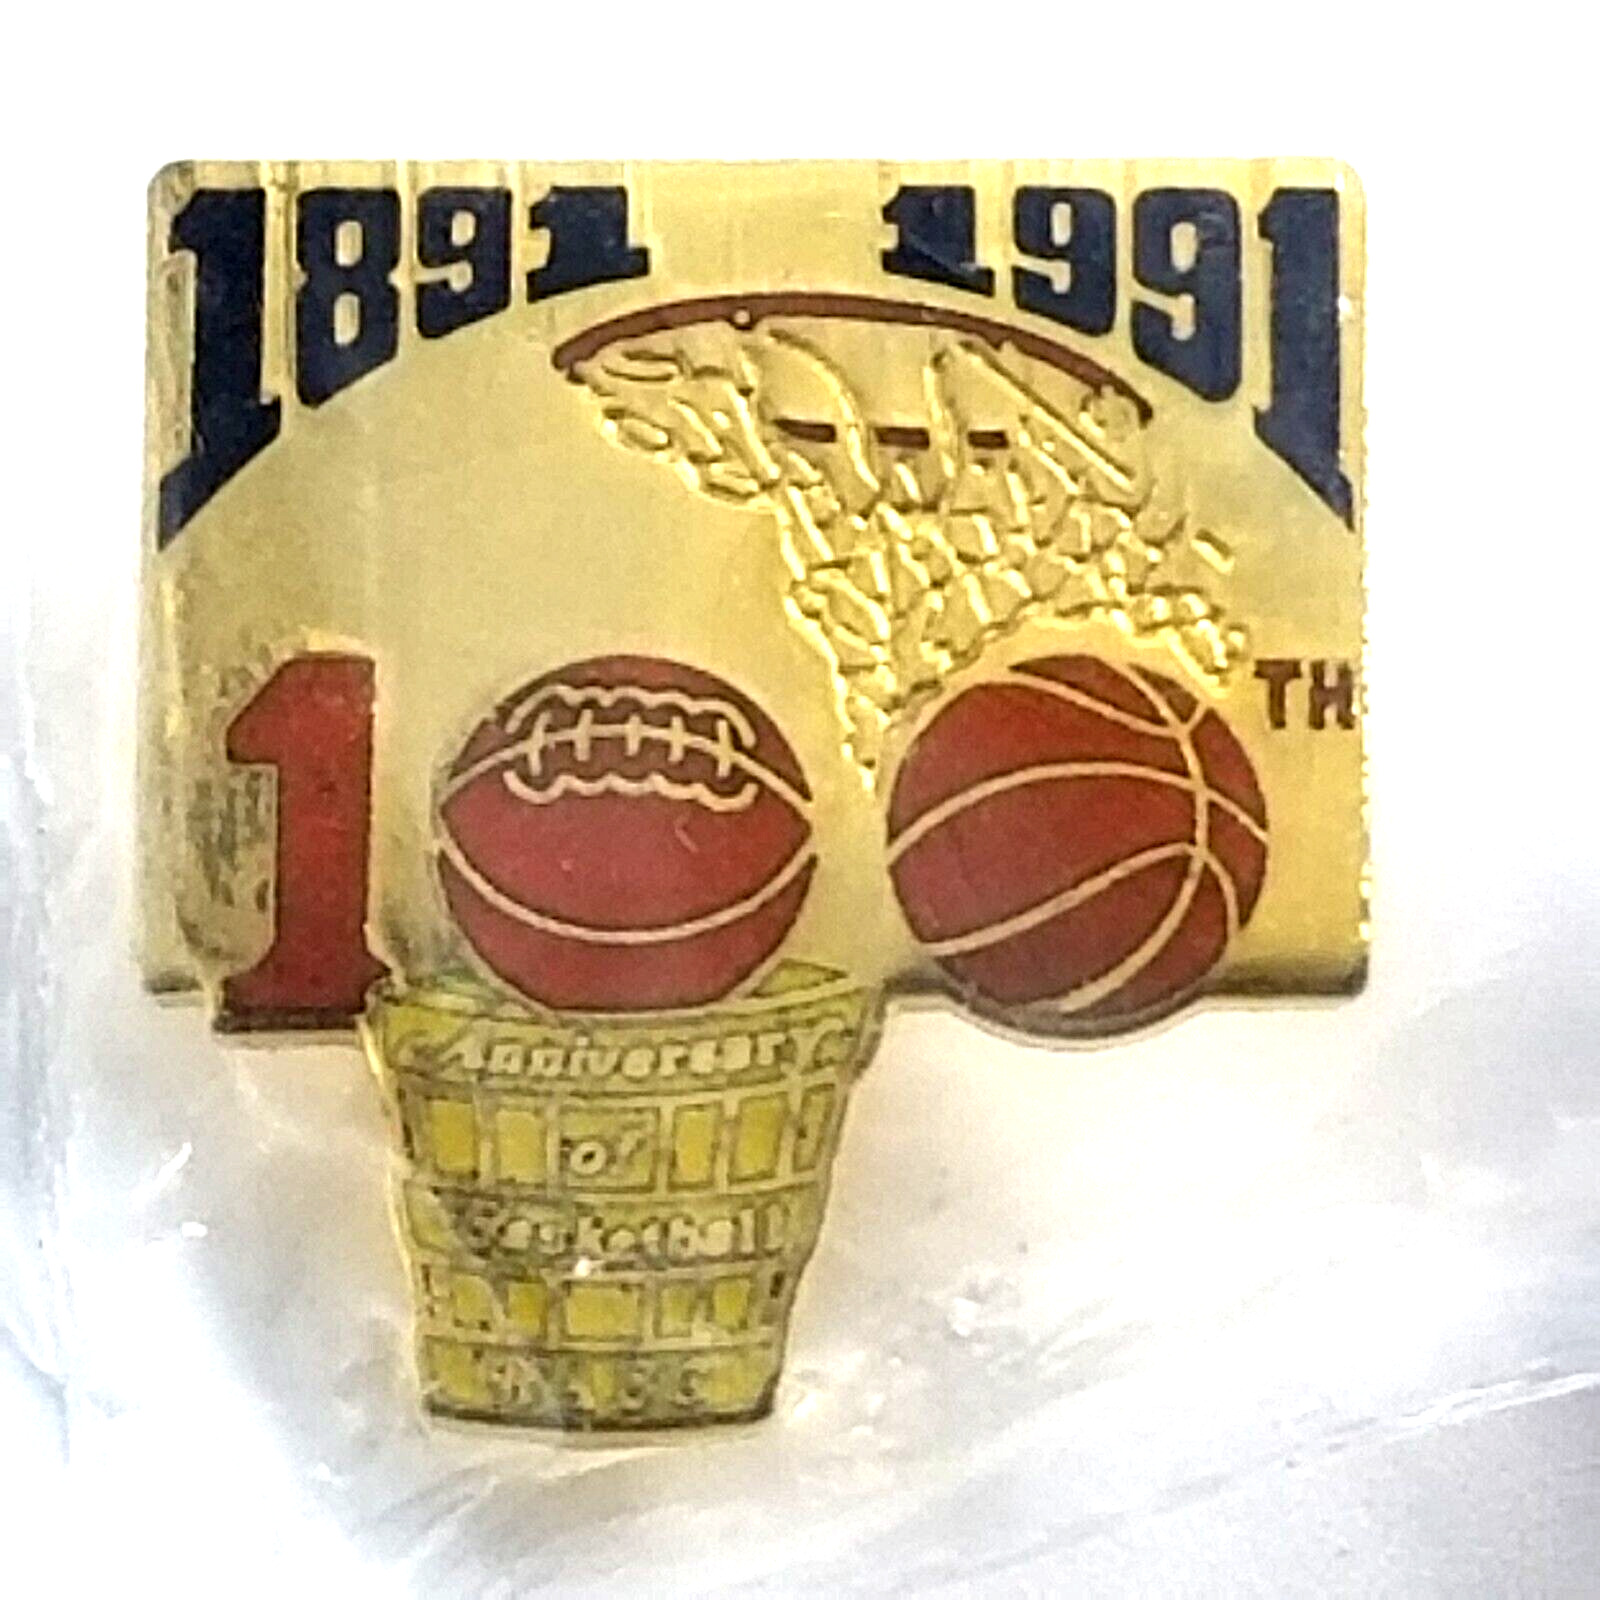 VTG 100th Anniversary Of Basketball NABC 1891-1991 Gold Tone Enamel Pin Souvenir